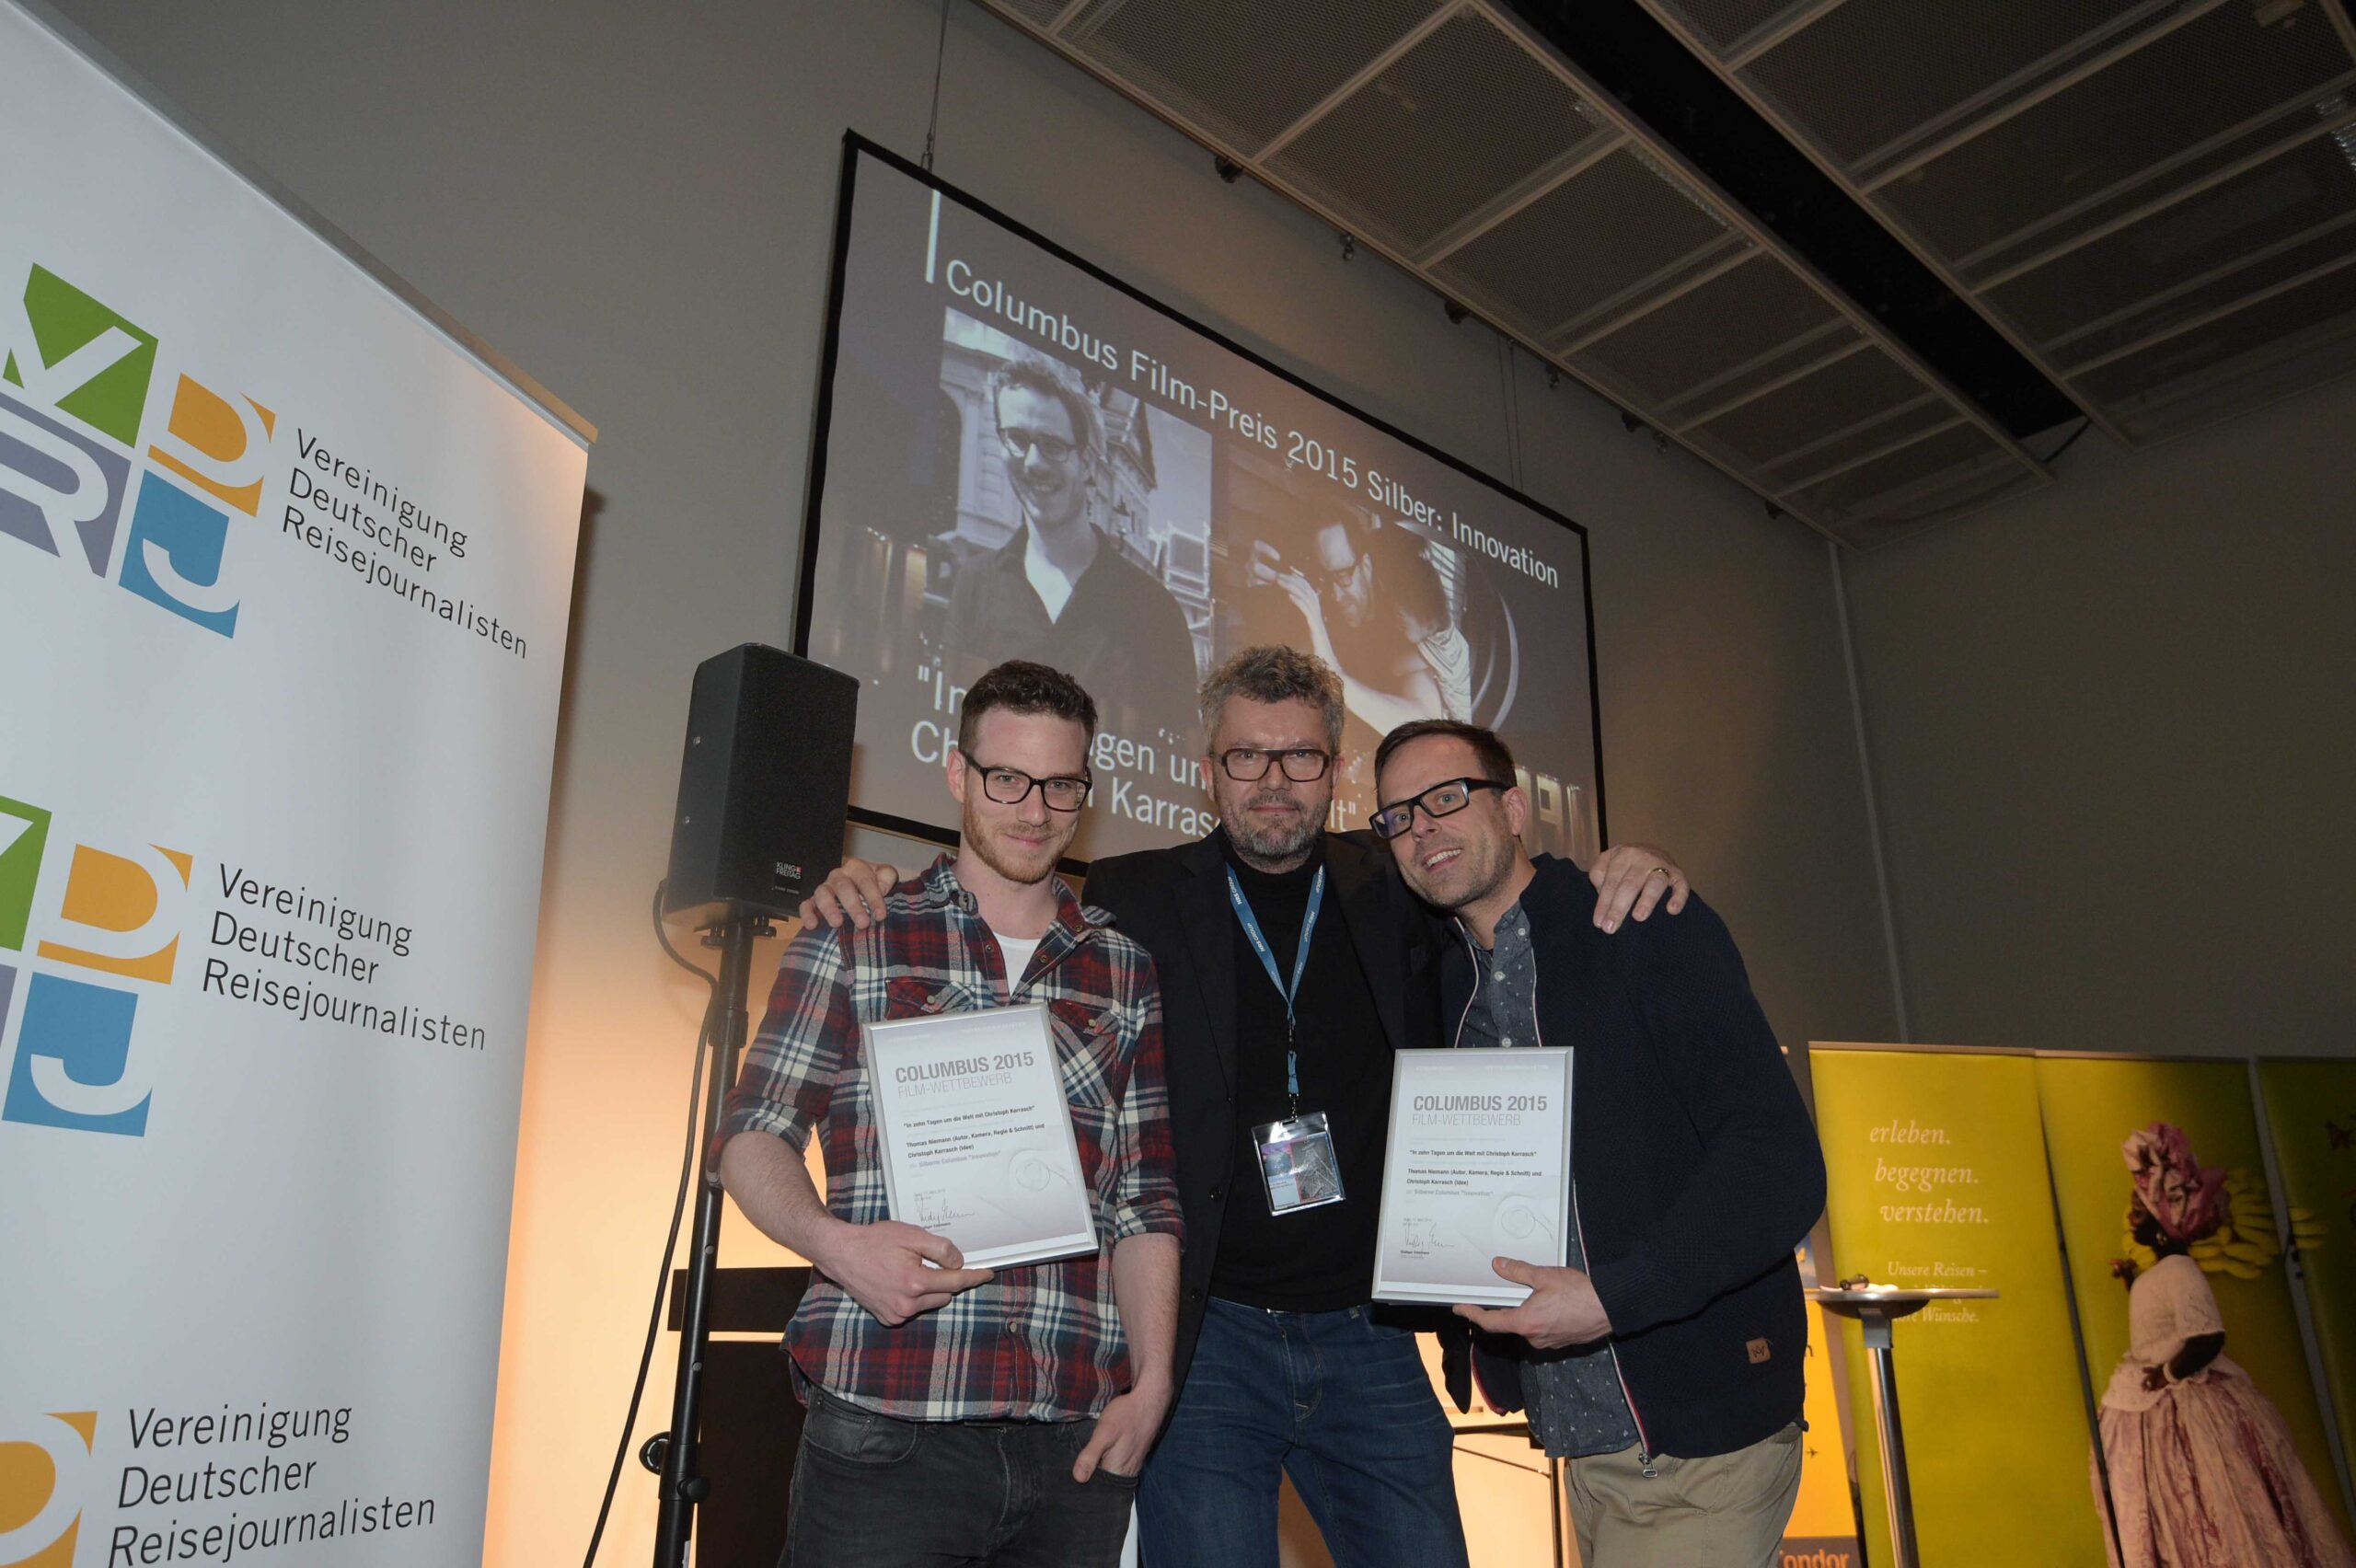 Columbus Film Preis 2015 Silber Innovation Christoph Karrasch und Thomas Niemann mit Thomas Radler web